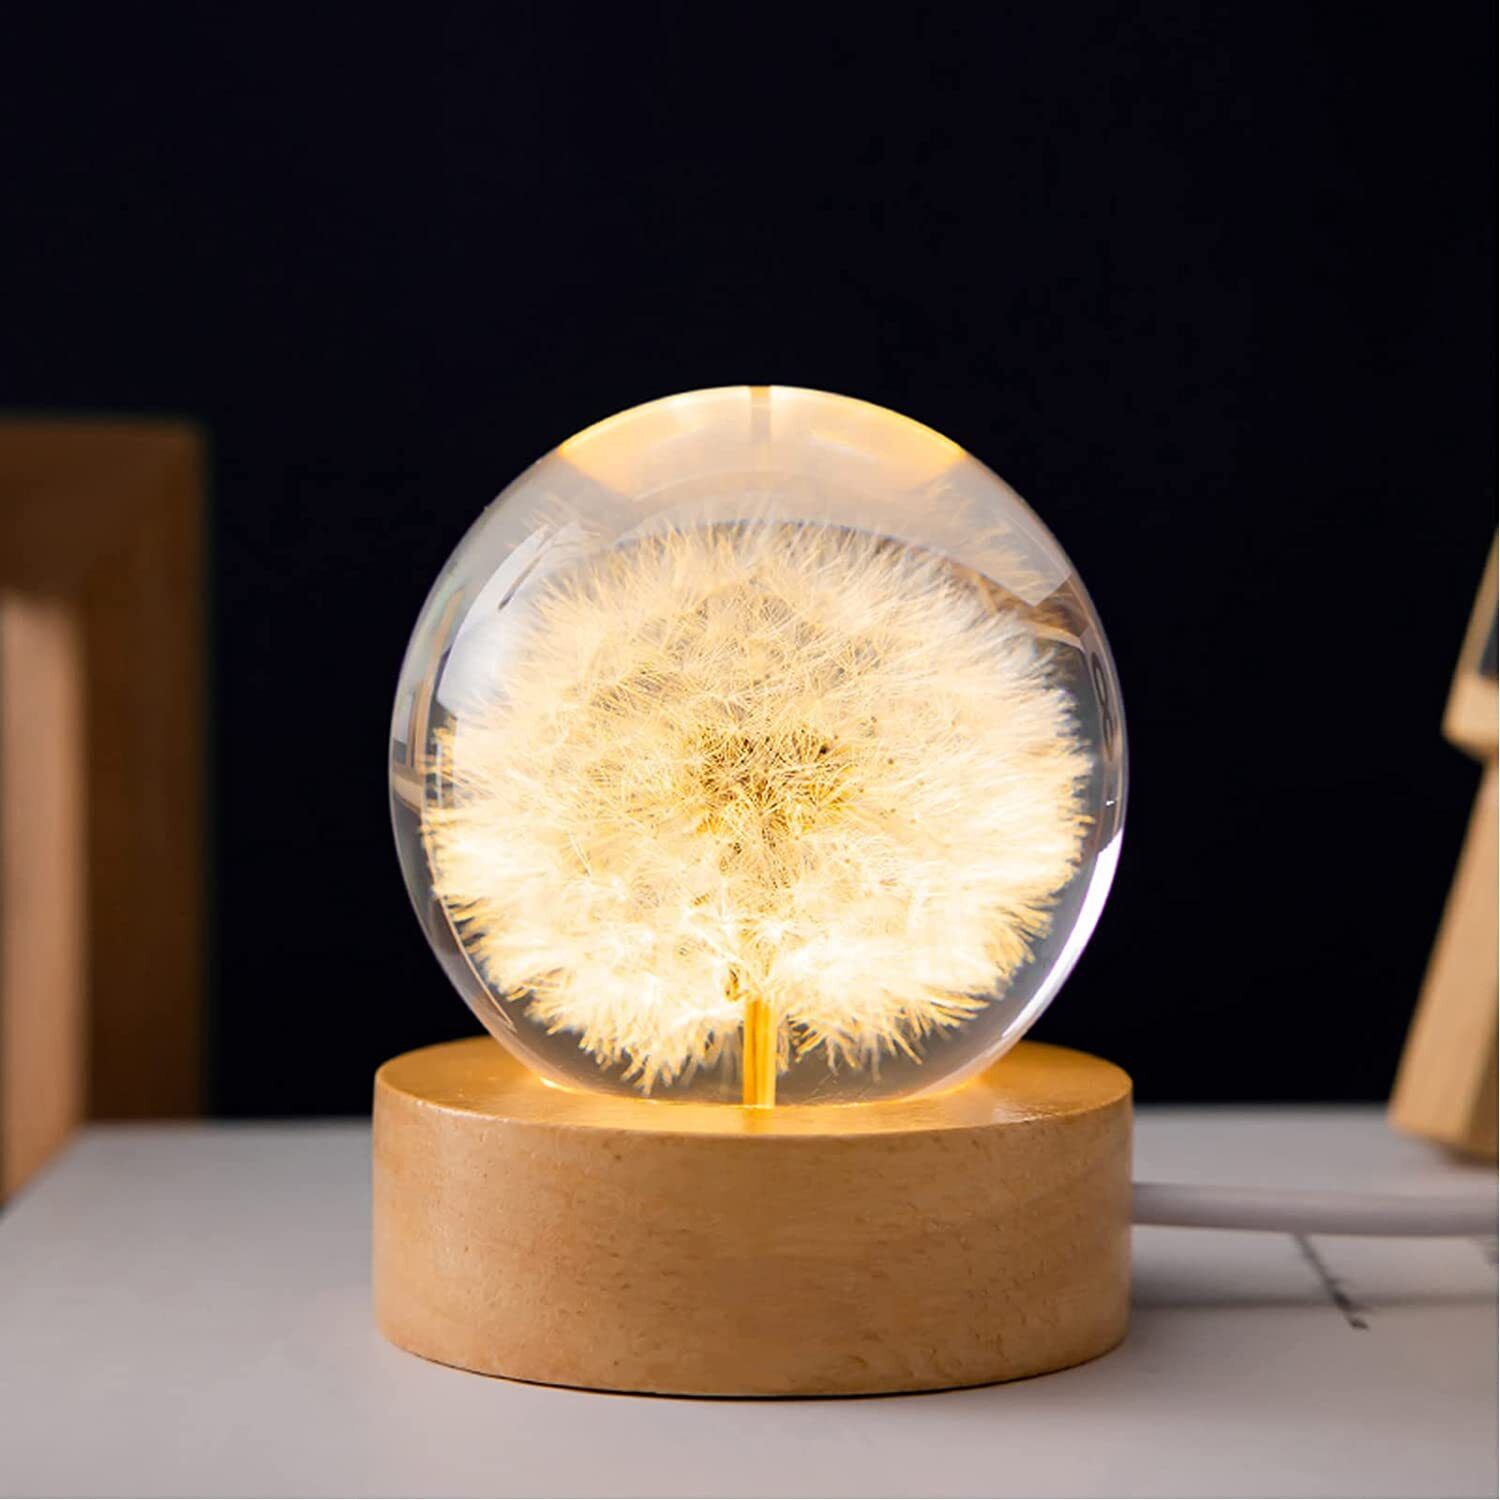 Dandelion Preserved Flower Crystal Ball Bedside Night Light Lamp